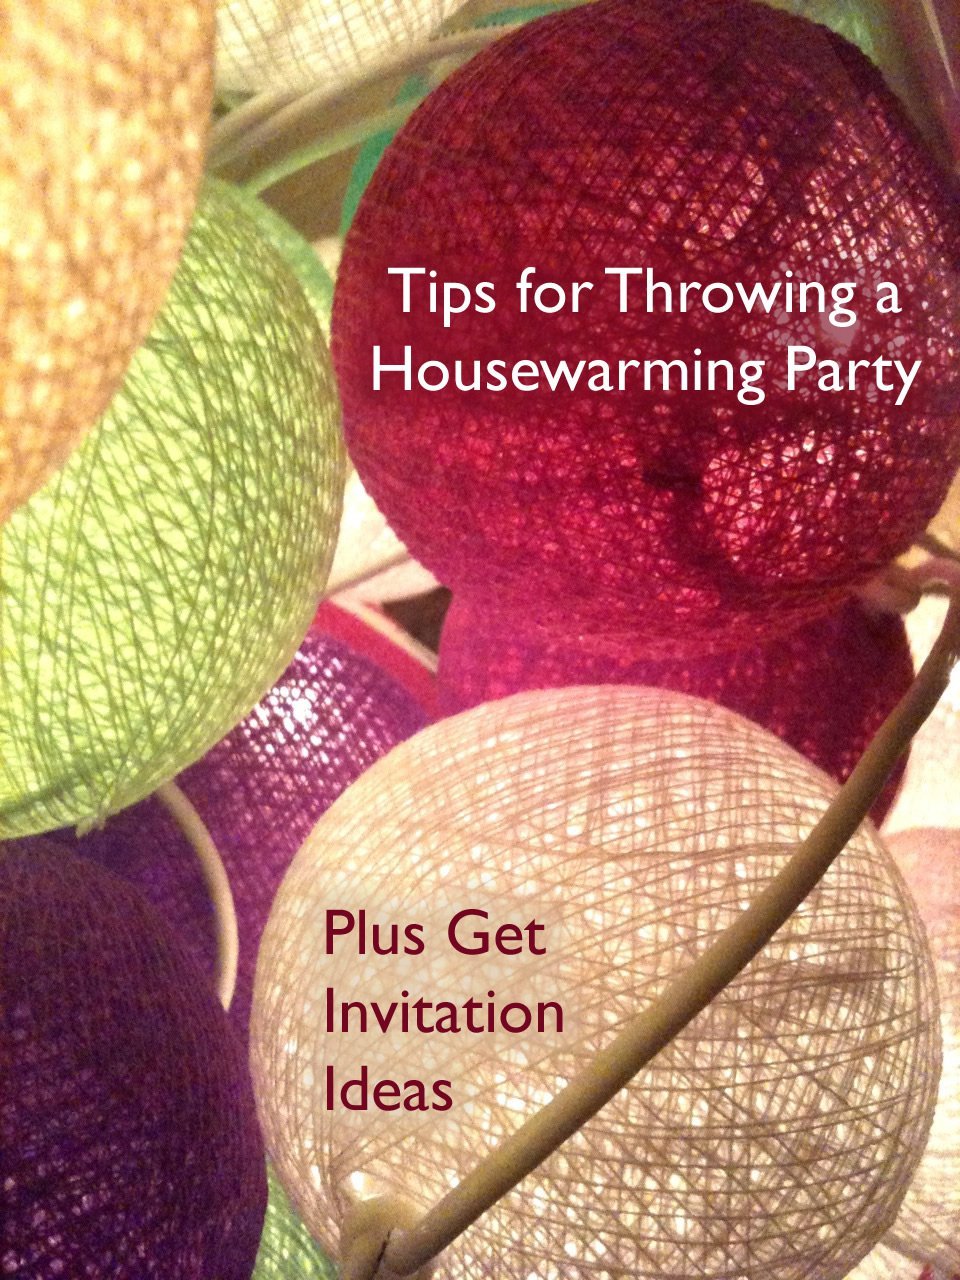 Housewarming Party Invitation Ideas